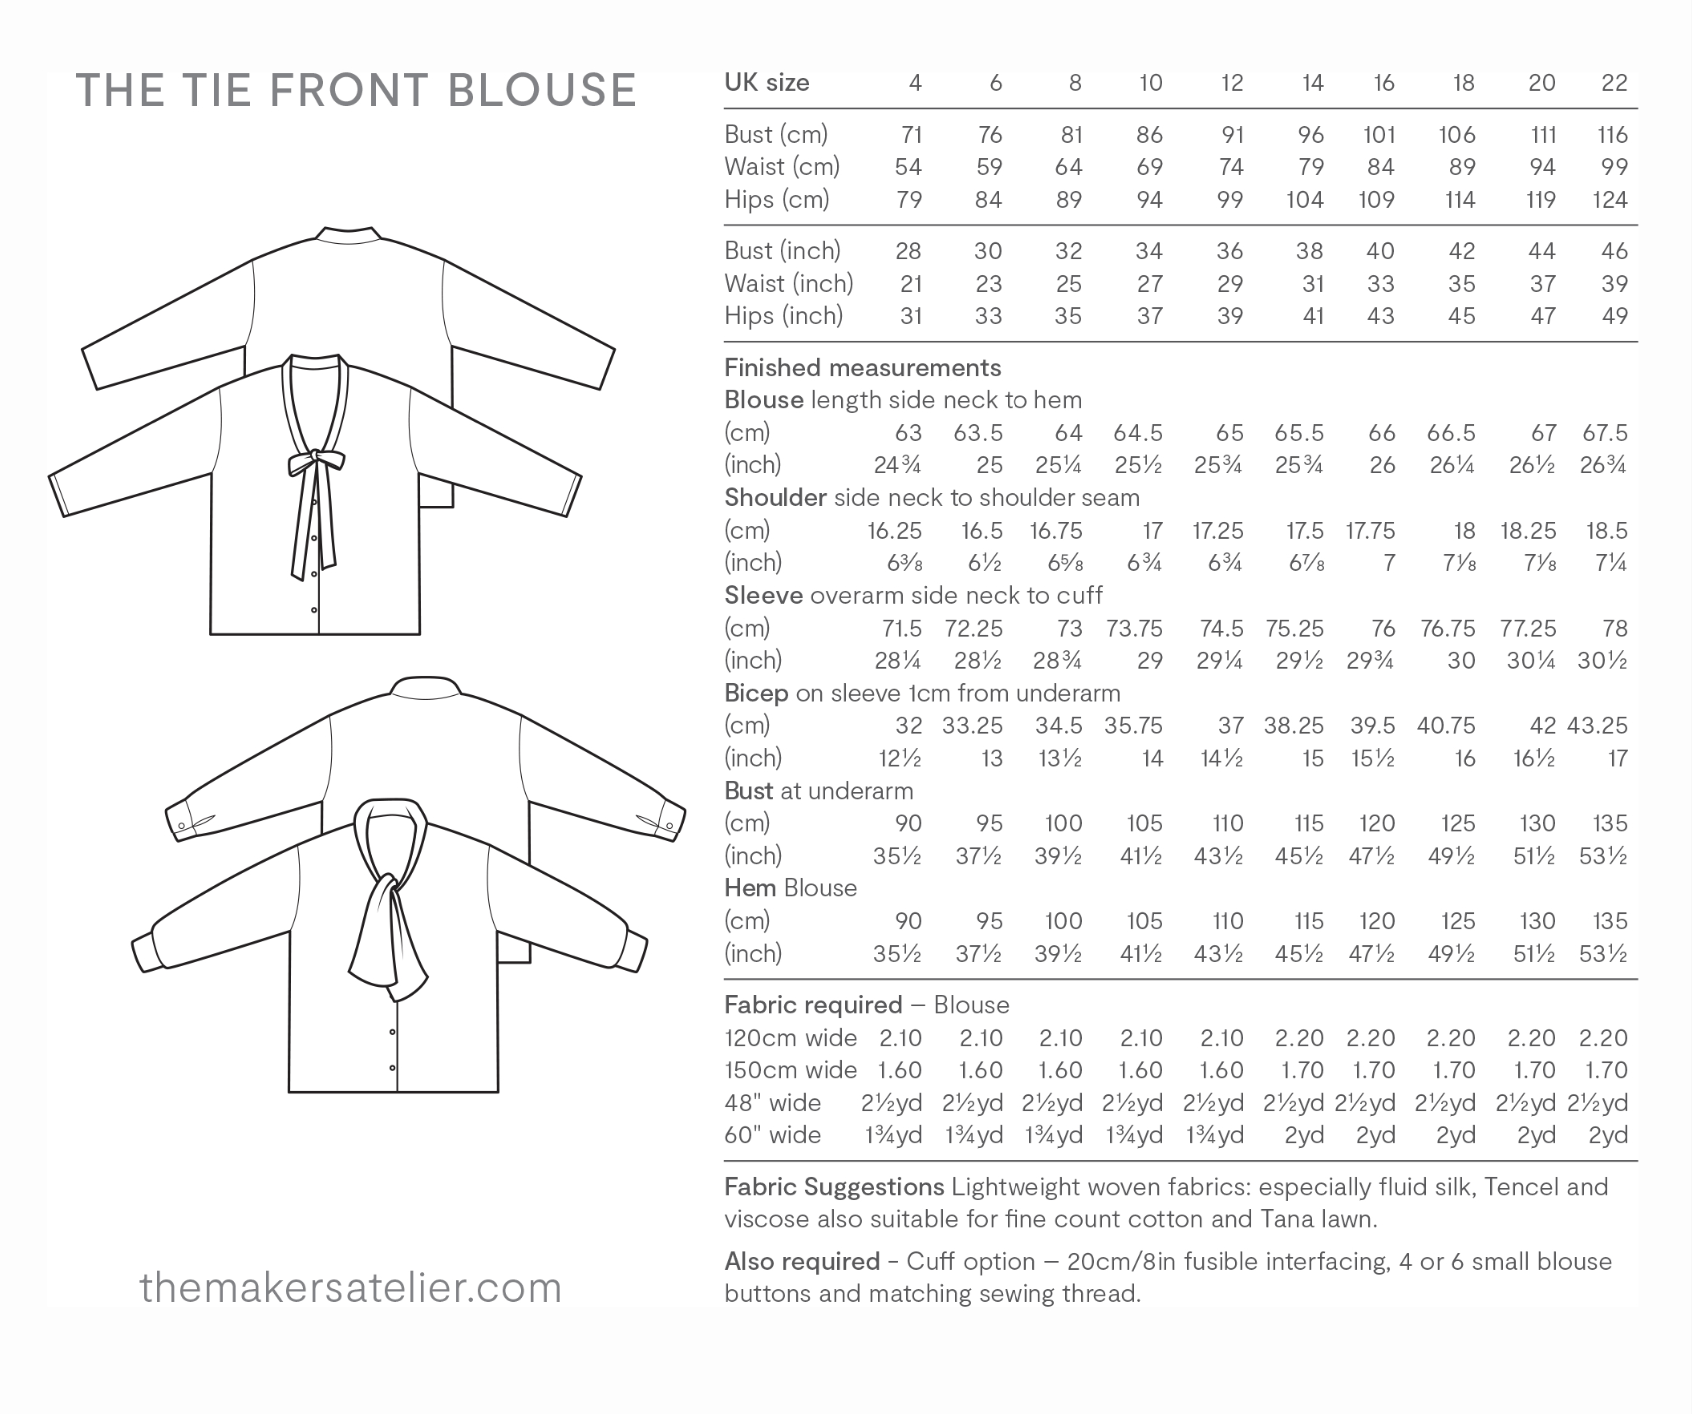 The Maker's Atelier Tie Front Blouse